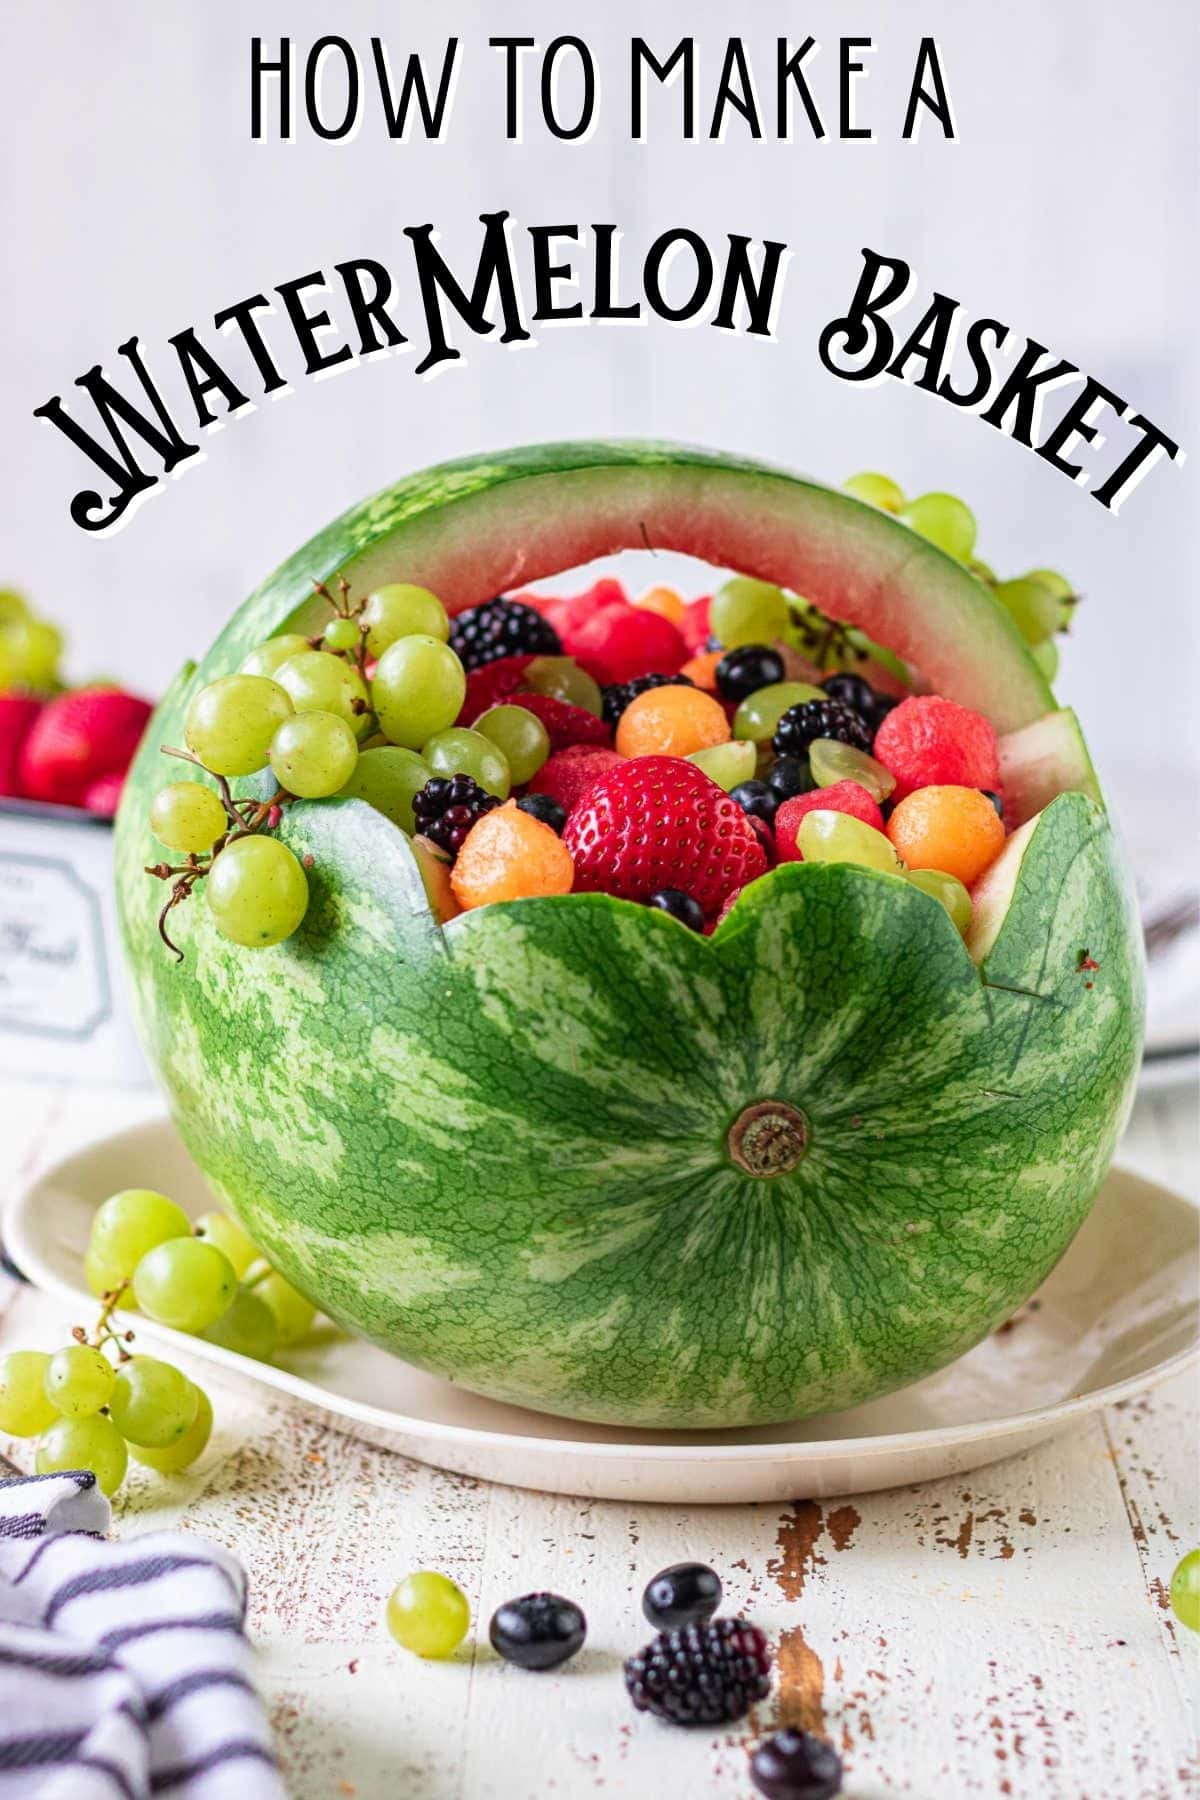 https://www.restlesschipotle.com/wp-content/uploads/2021/06/how-to-make-a-watermelon-basket.jpg